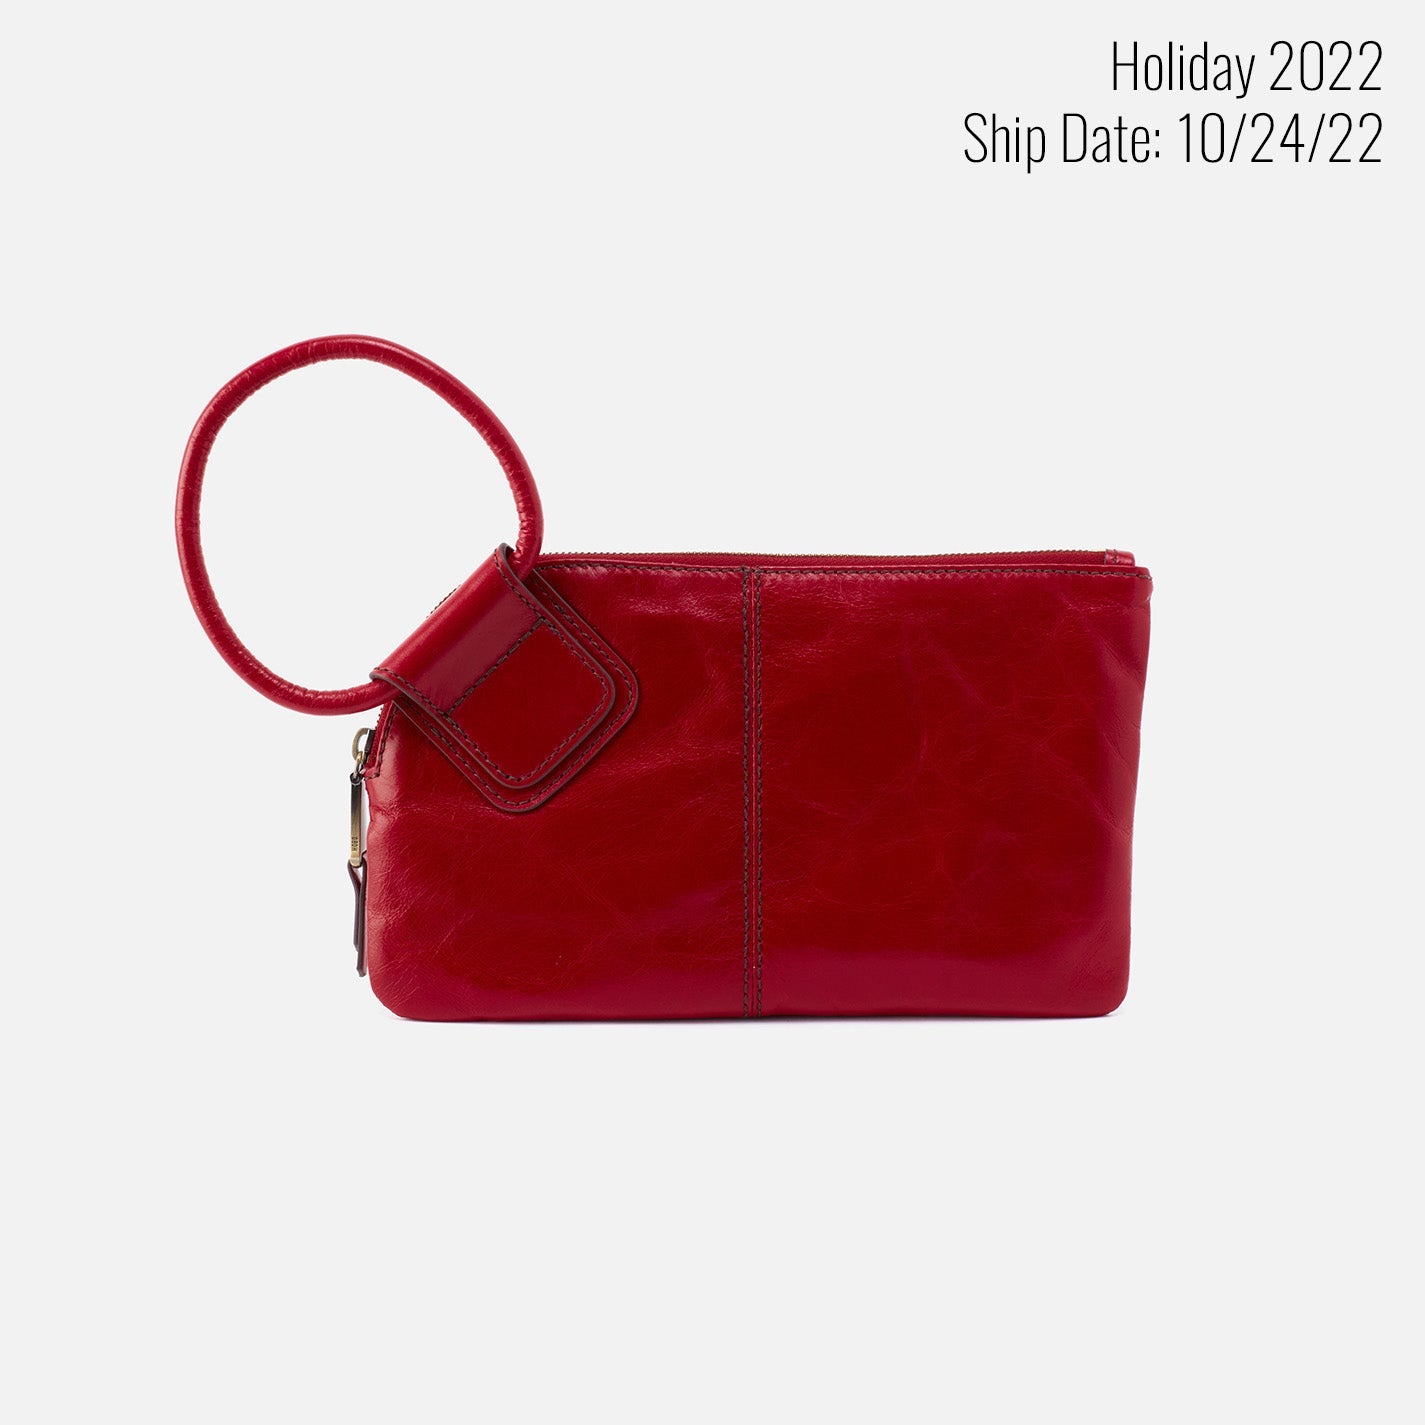 HOBO Sable Wristlet - Crimson